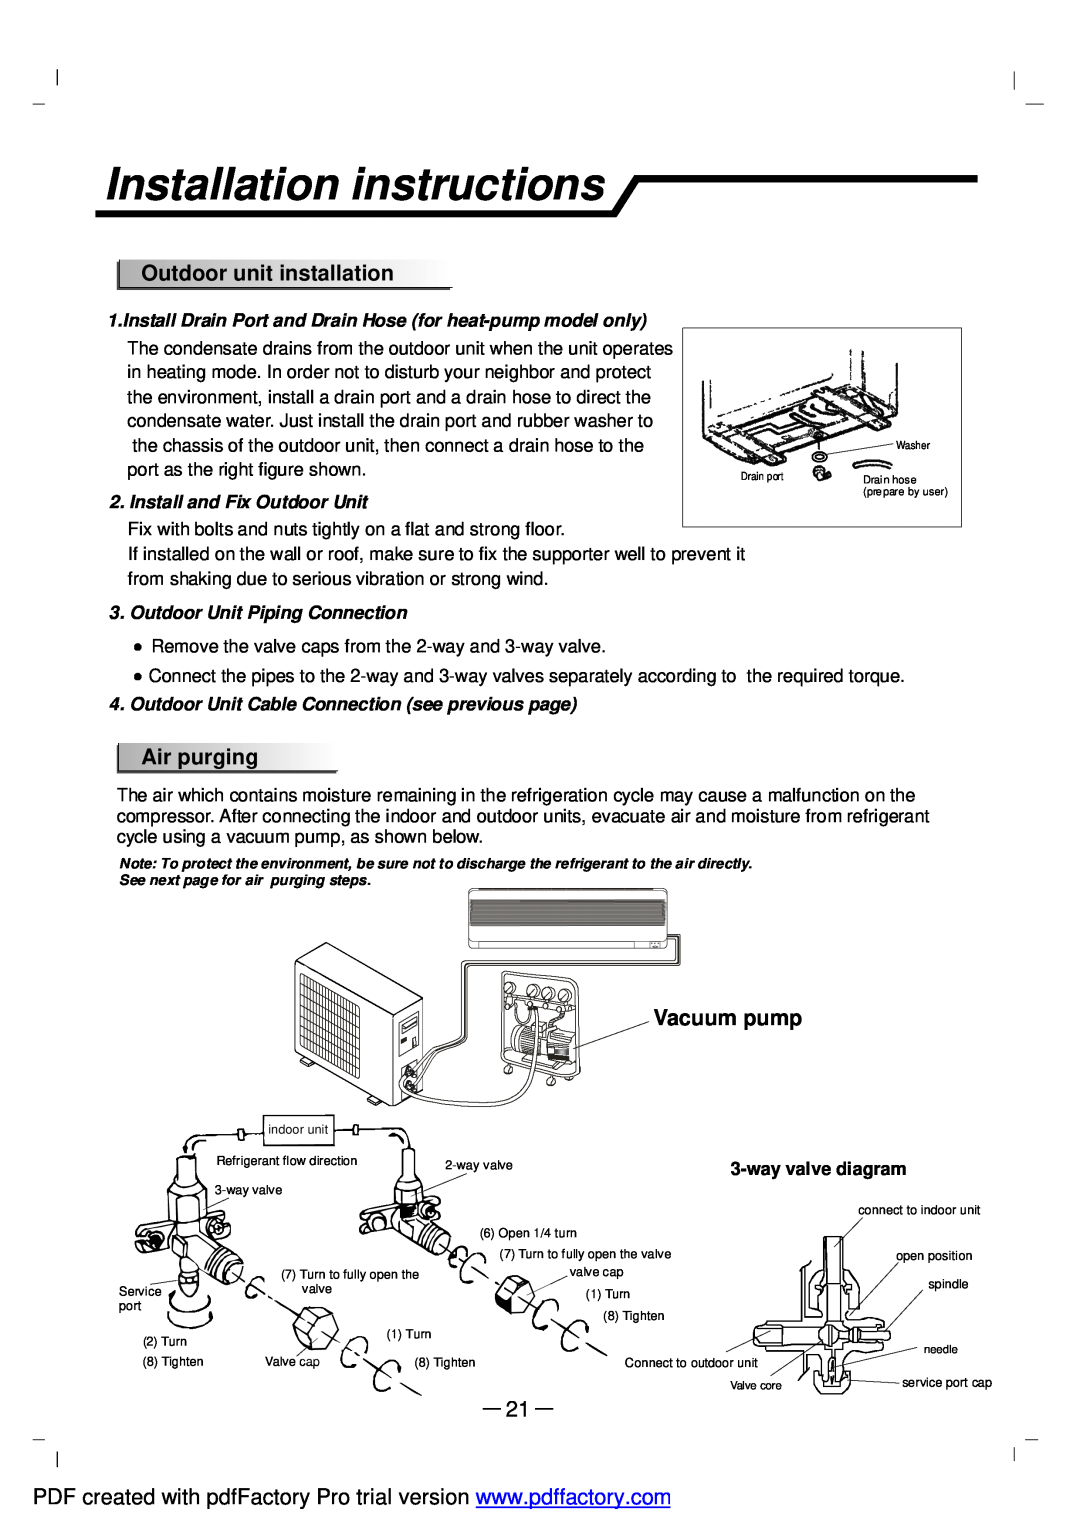 NEC RIH-6867 Installation instructions, Outdoorunitinstallation, Airpurging, Vacuum pump, Install and Fix Outdoor Unit 